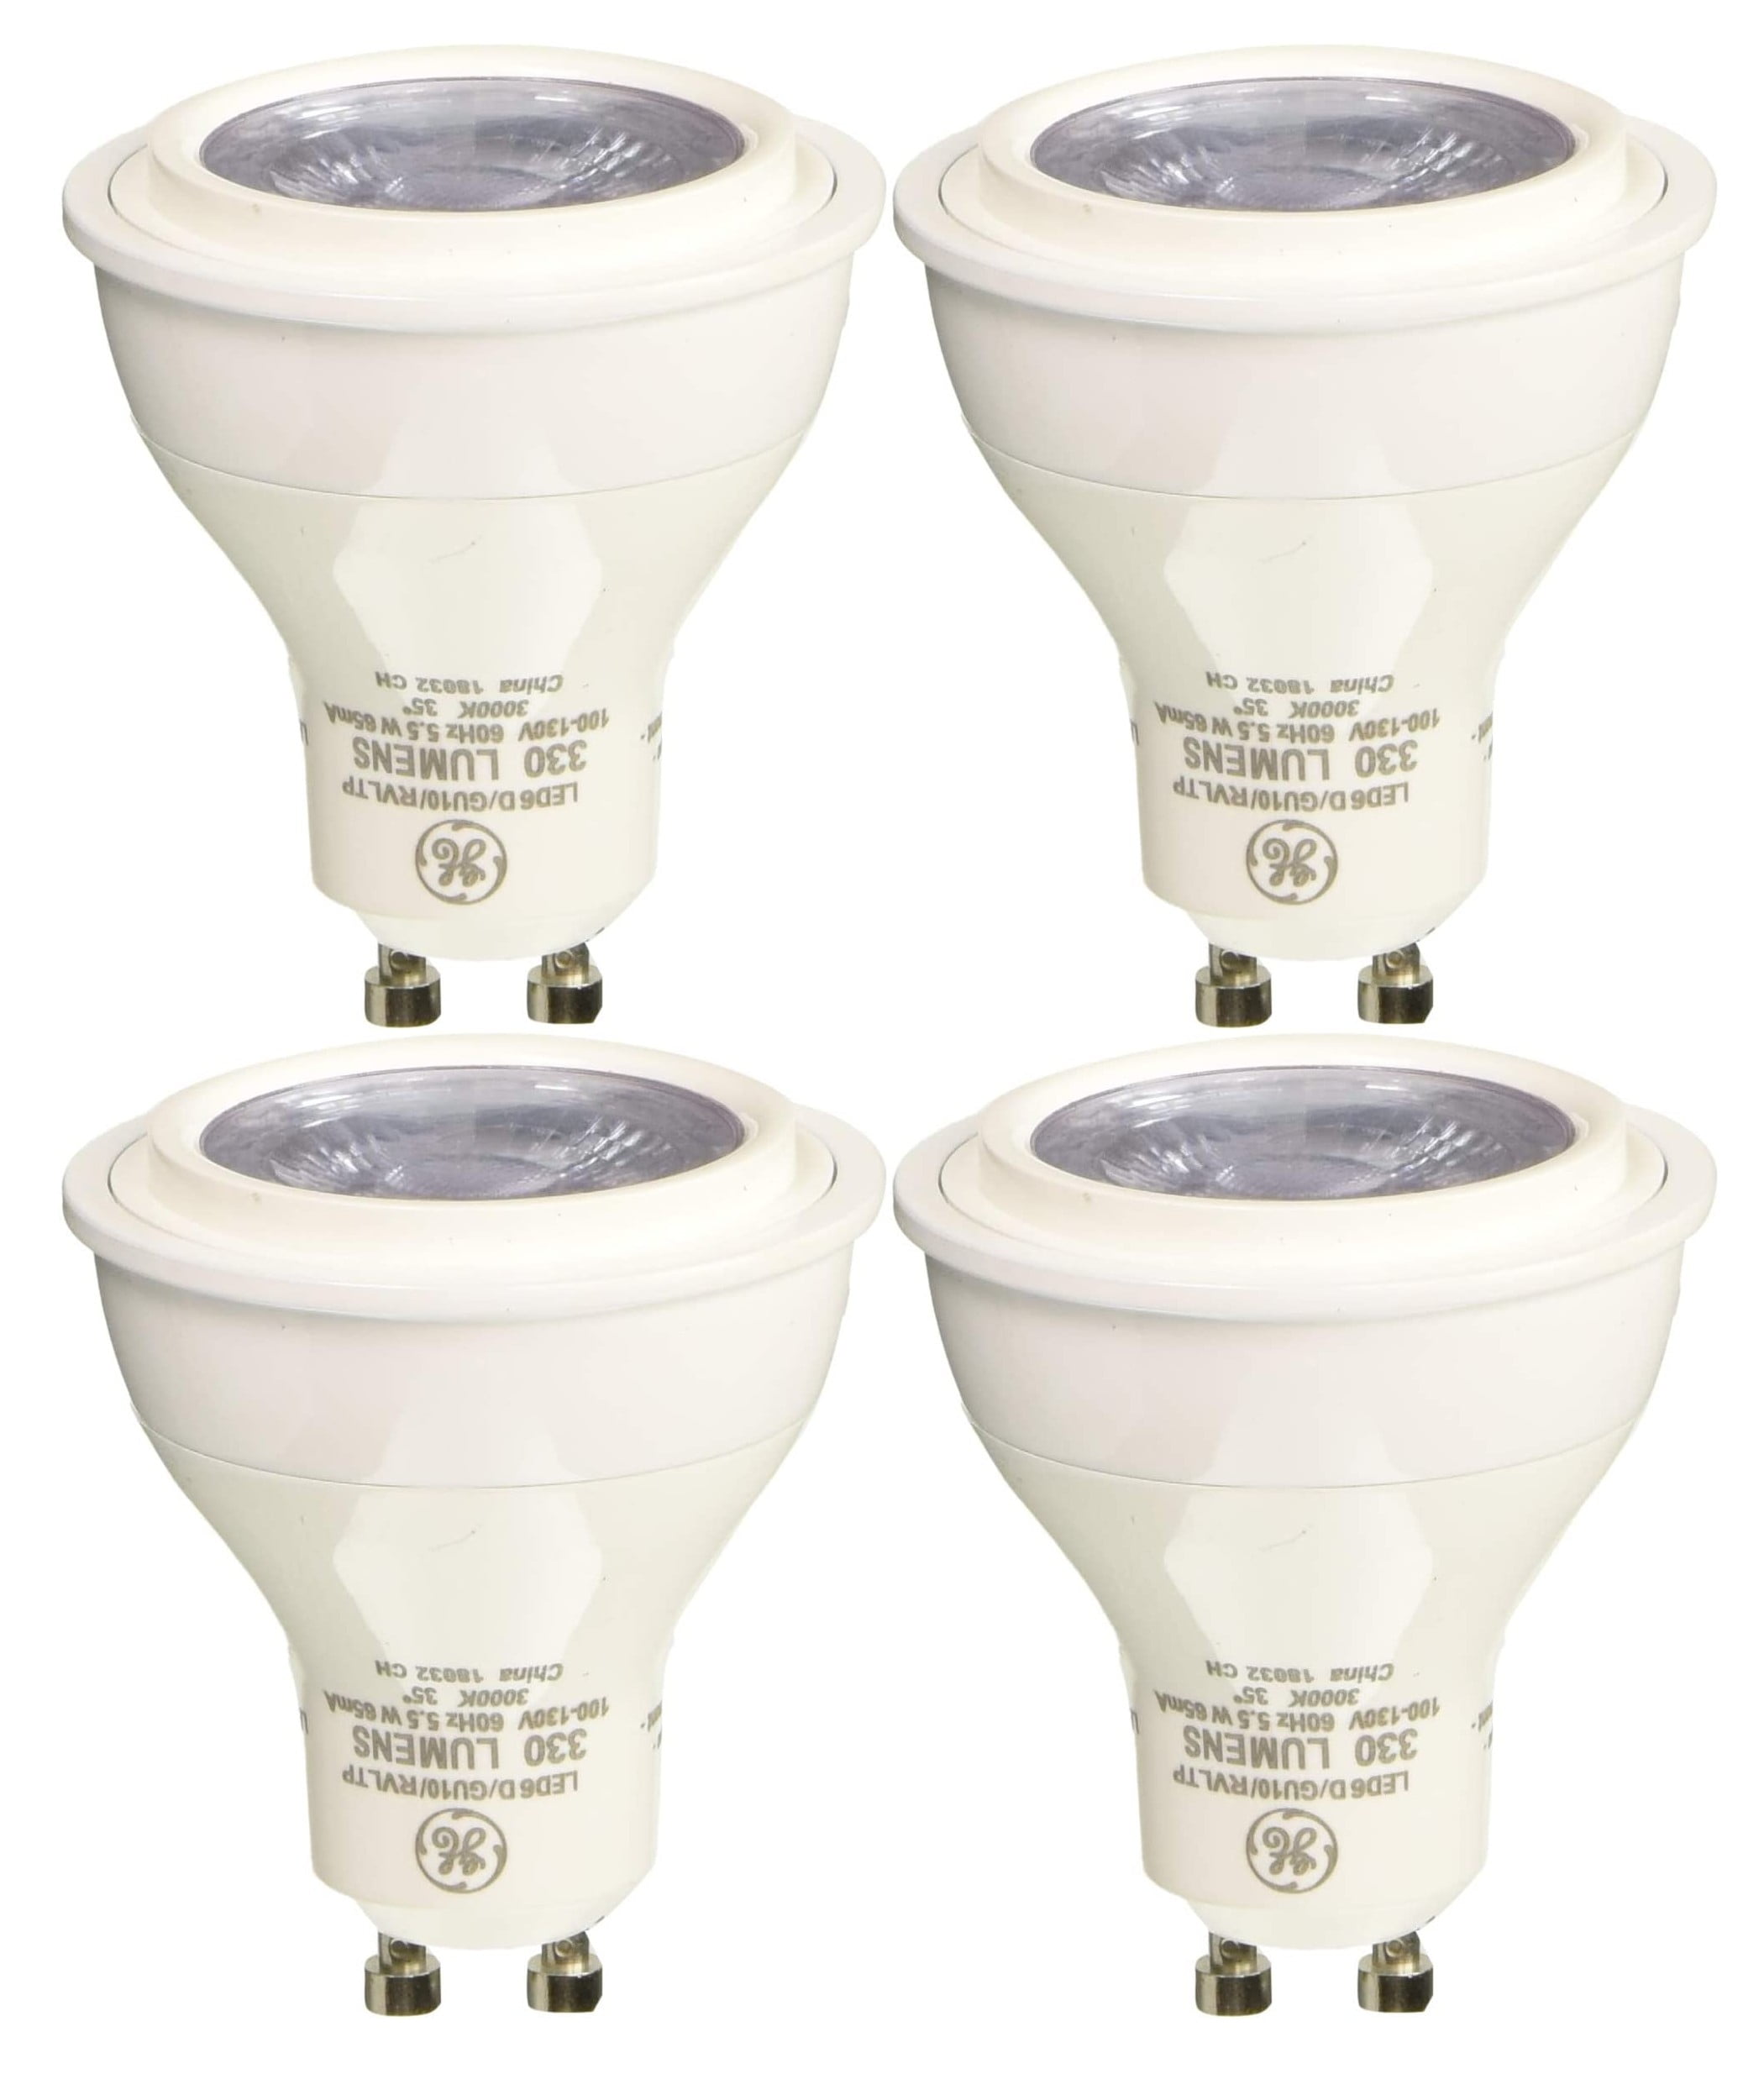 overschot adelaar Vergissing 4 bulbs) GE Lighting 35684 reveal LED 5.5-watt (50-watt Replacement), 330- lumen MR16 Light Bulb with GU10 Base - Walmart.com